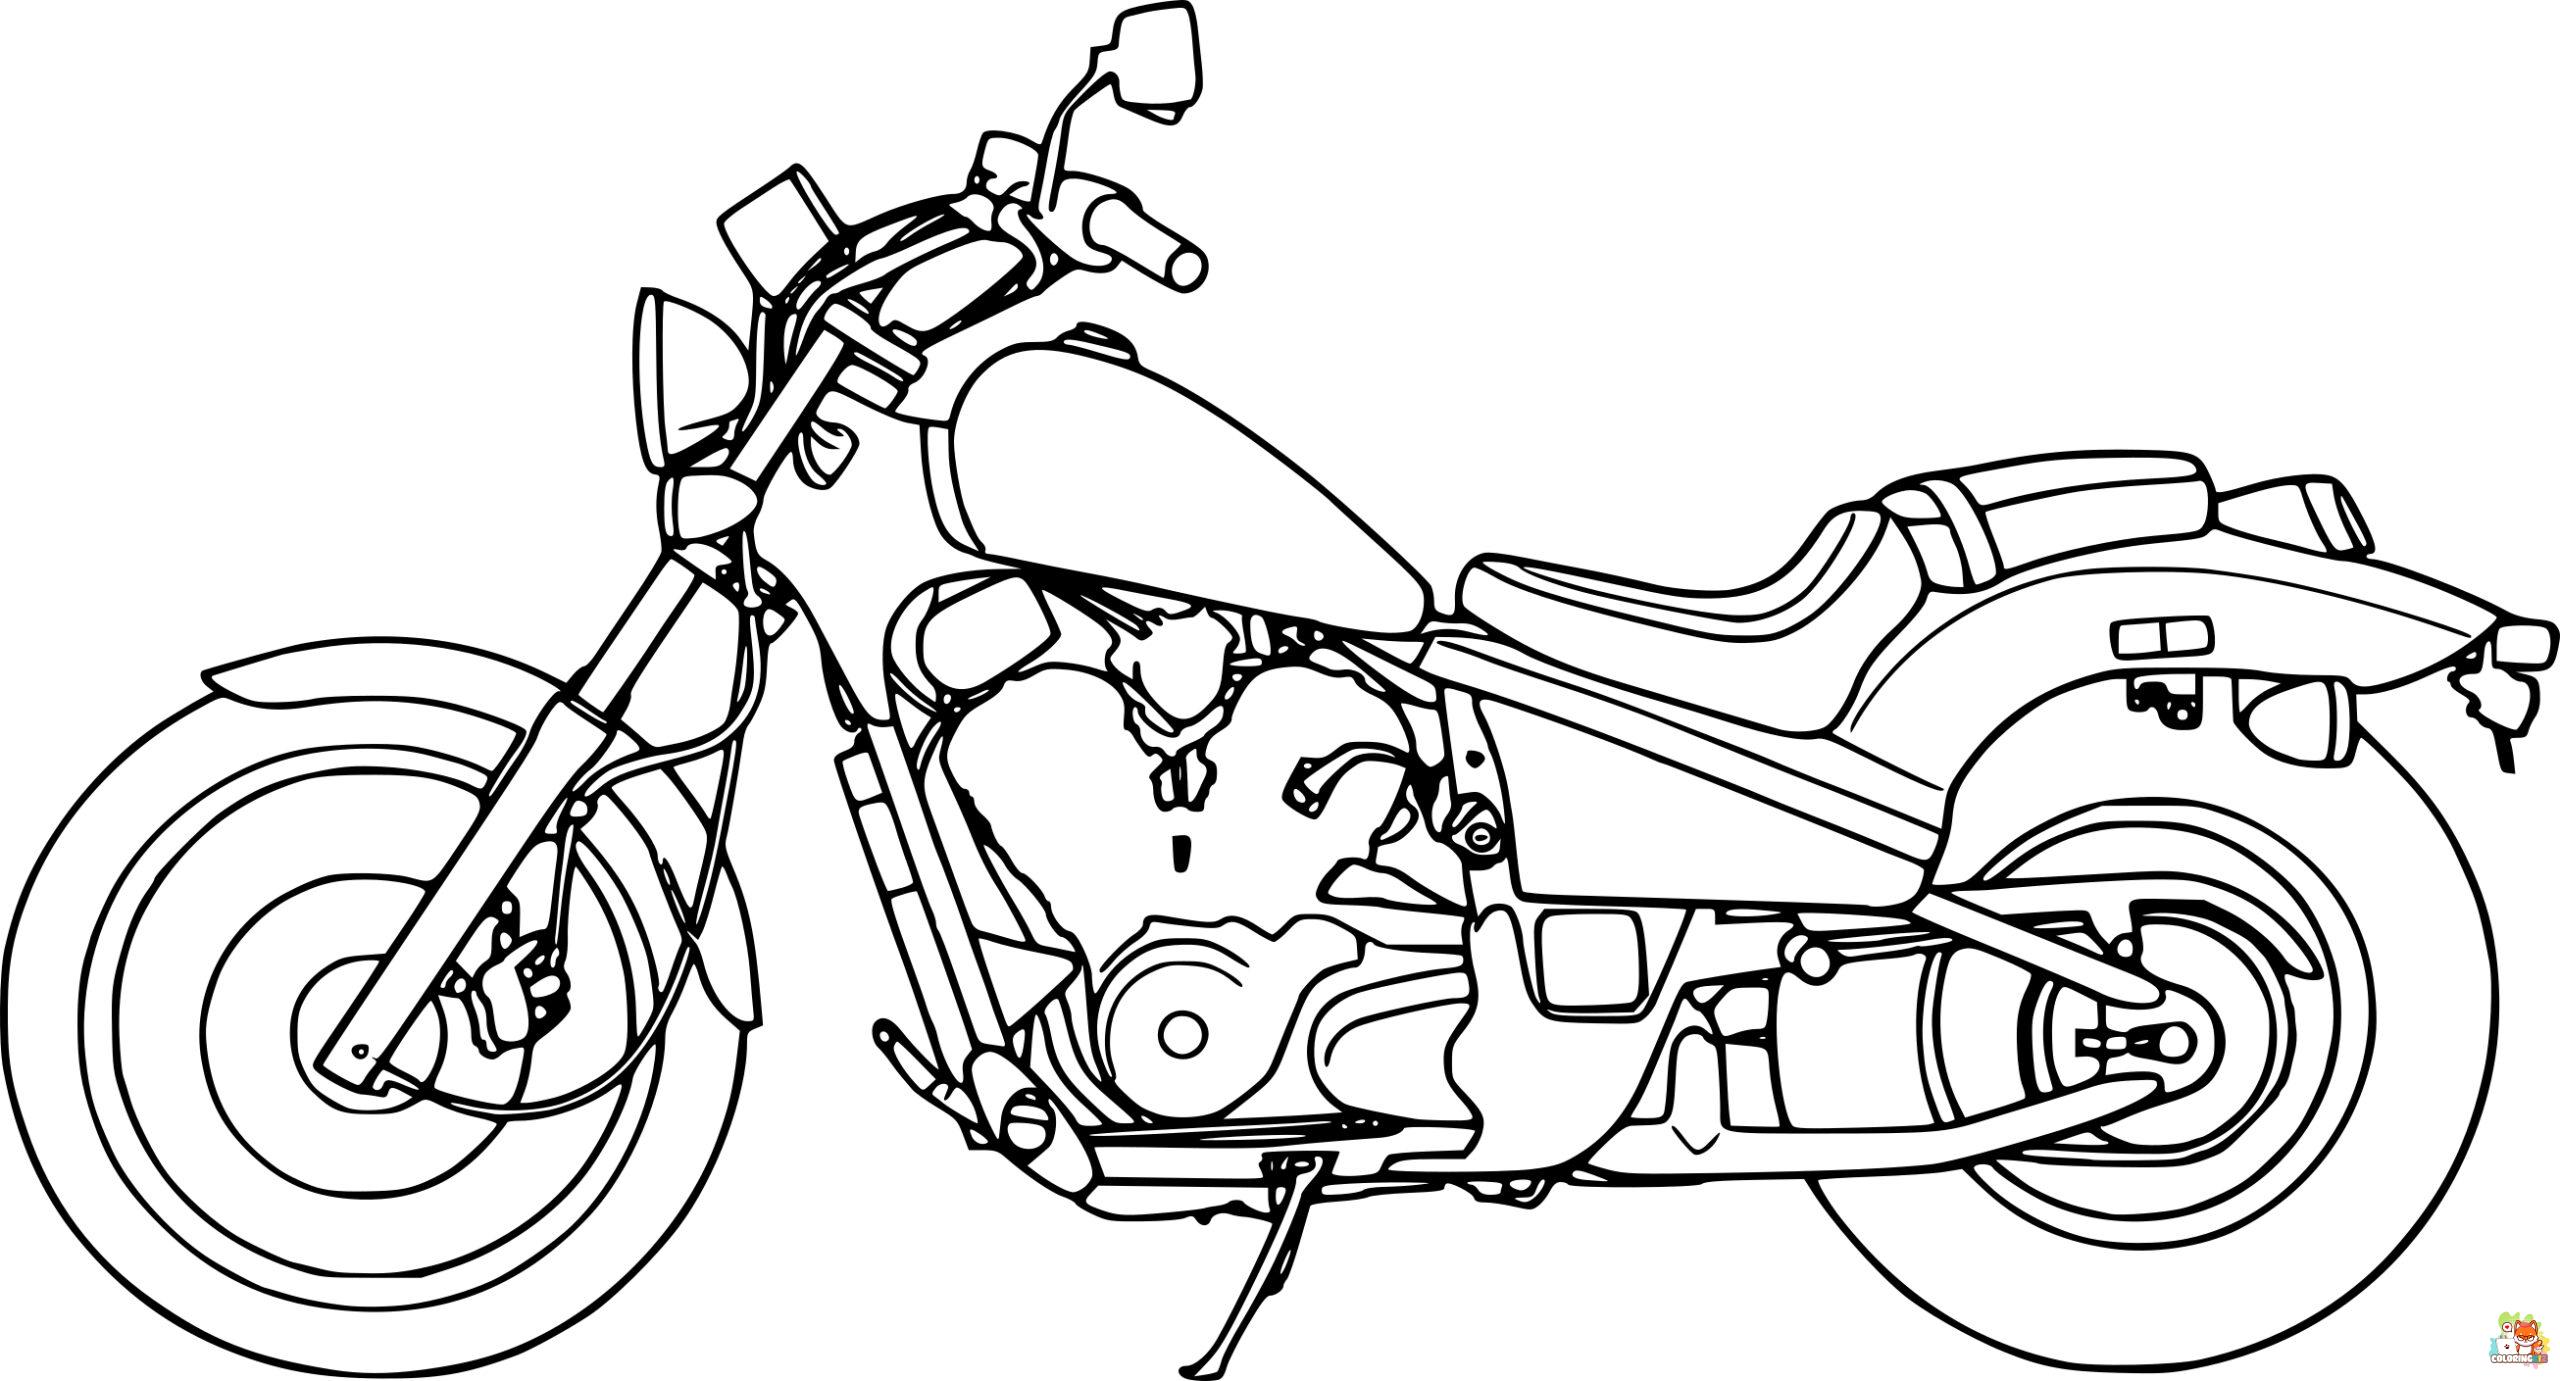 Printable Motorcycle coloring sheets 2